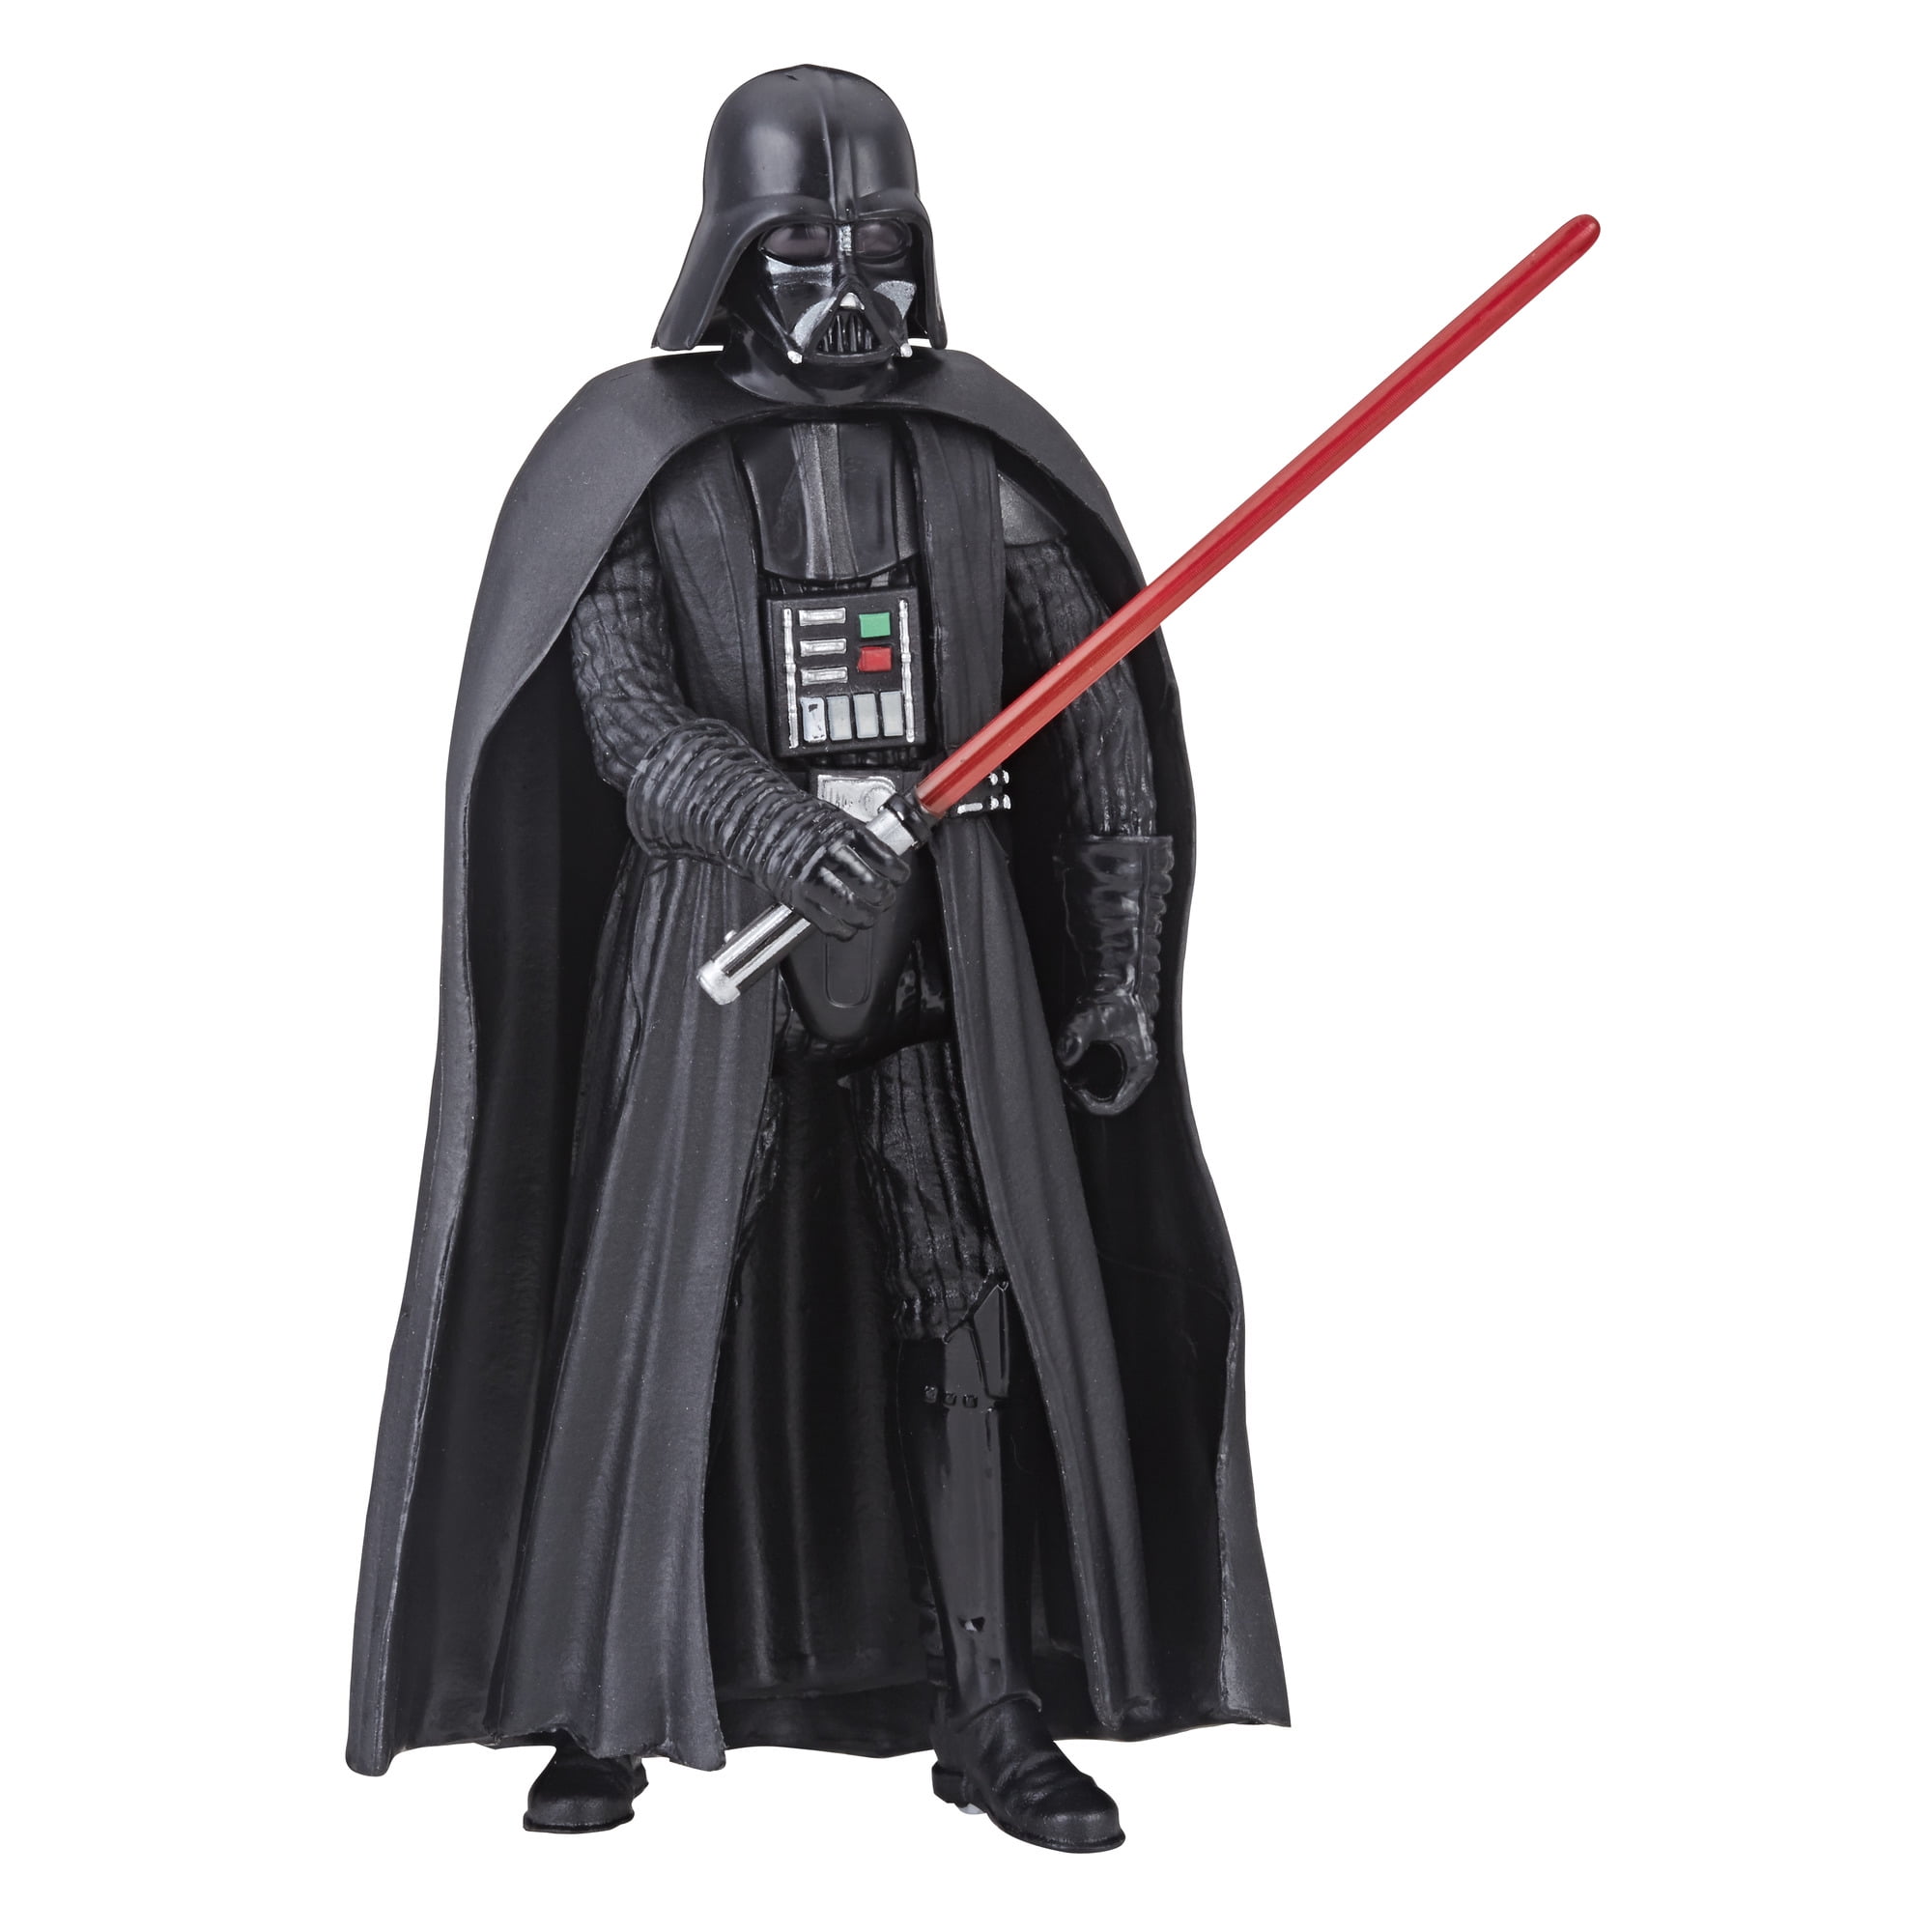 Star Wars Galaxy of Adventures Darth Vader 5-Inch-Scale Action Figure